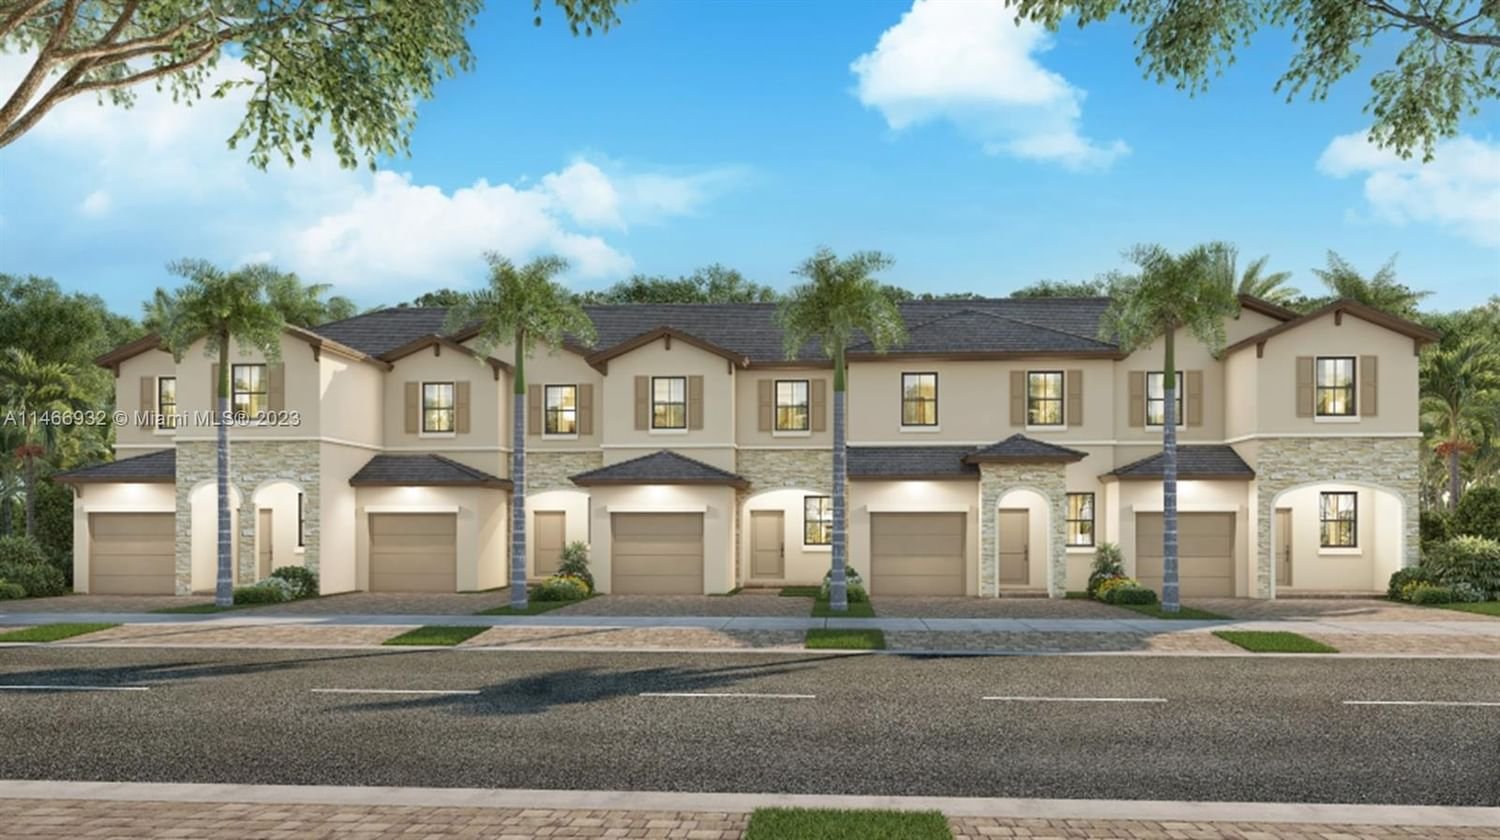 Real estate property located at 23002 128th Pl #0, Miami-Dade County, Miami, FL